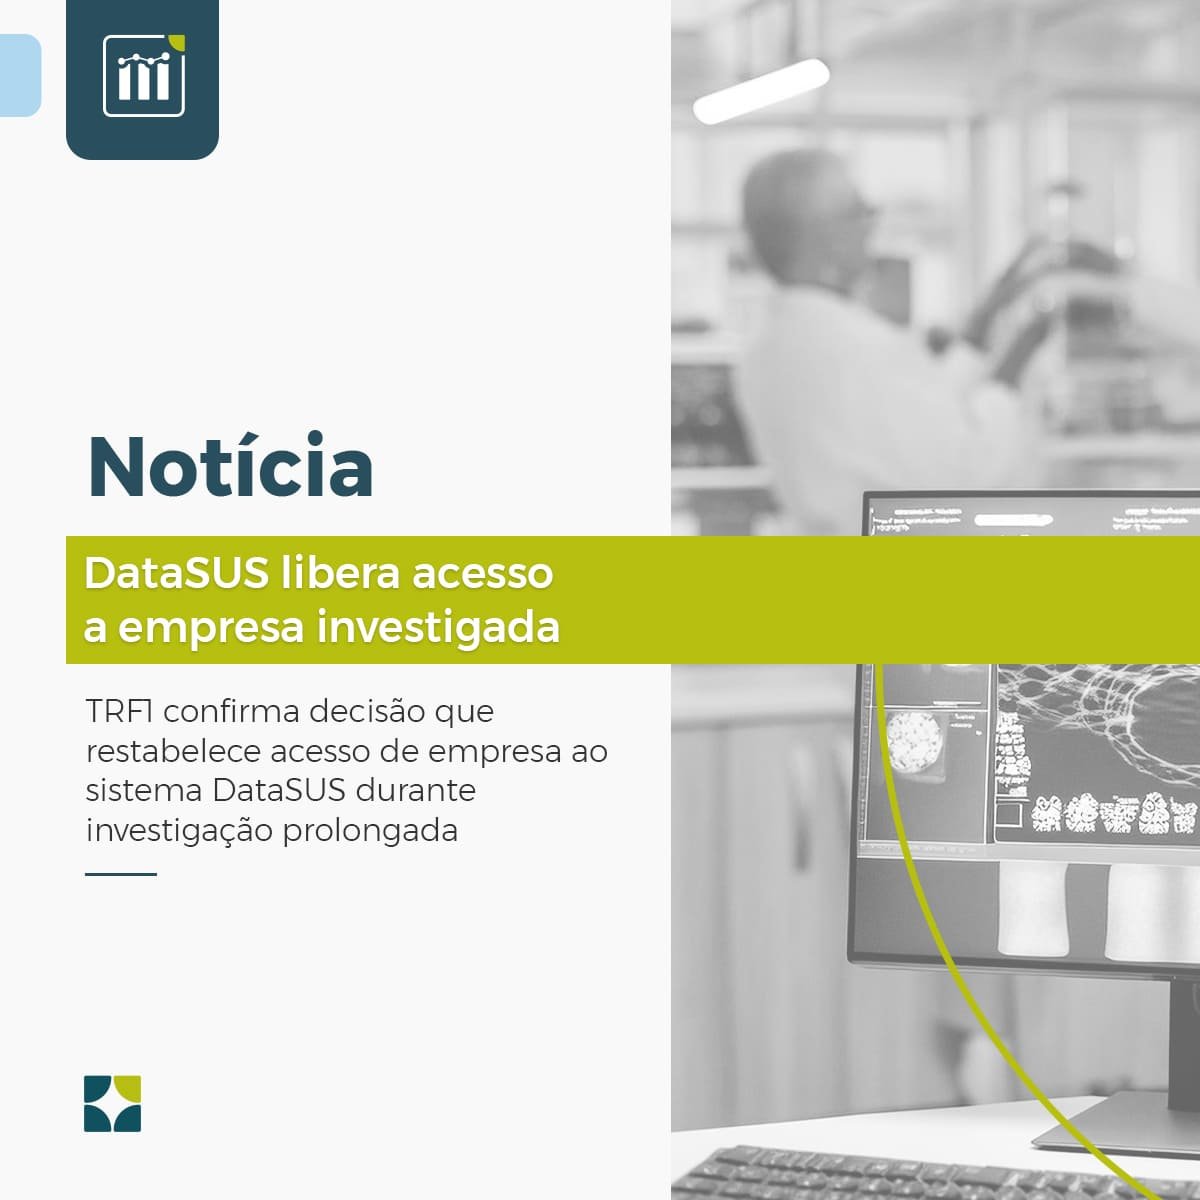 DataSUS libera acesso a empresa investigada